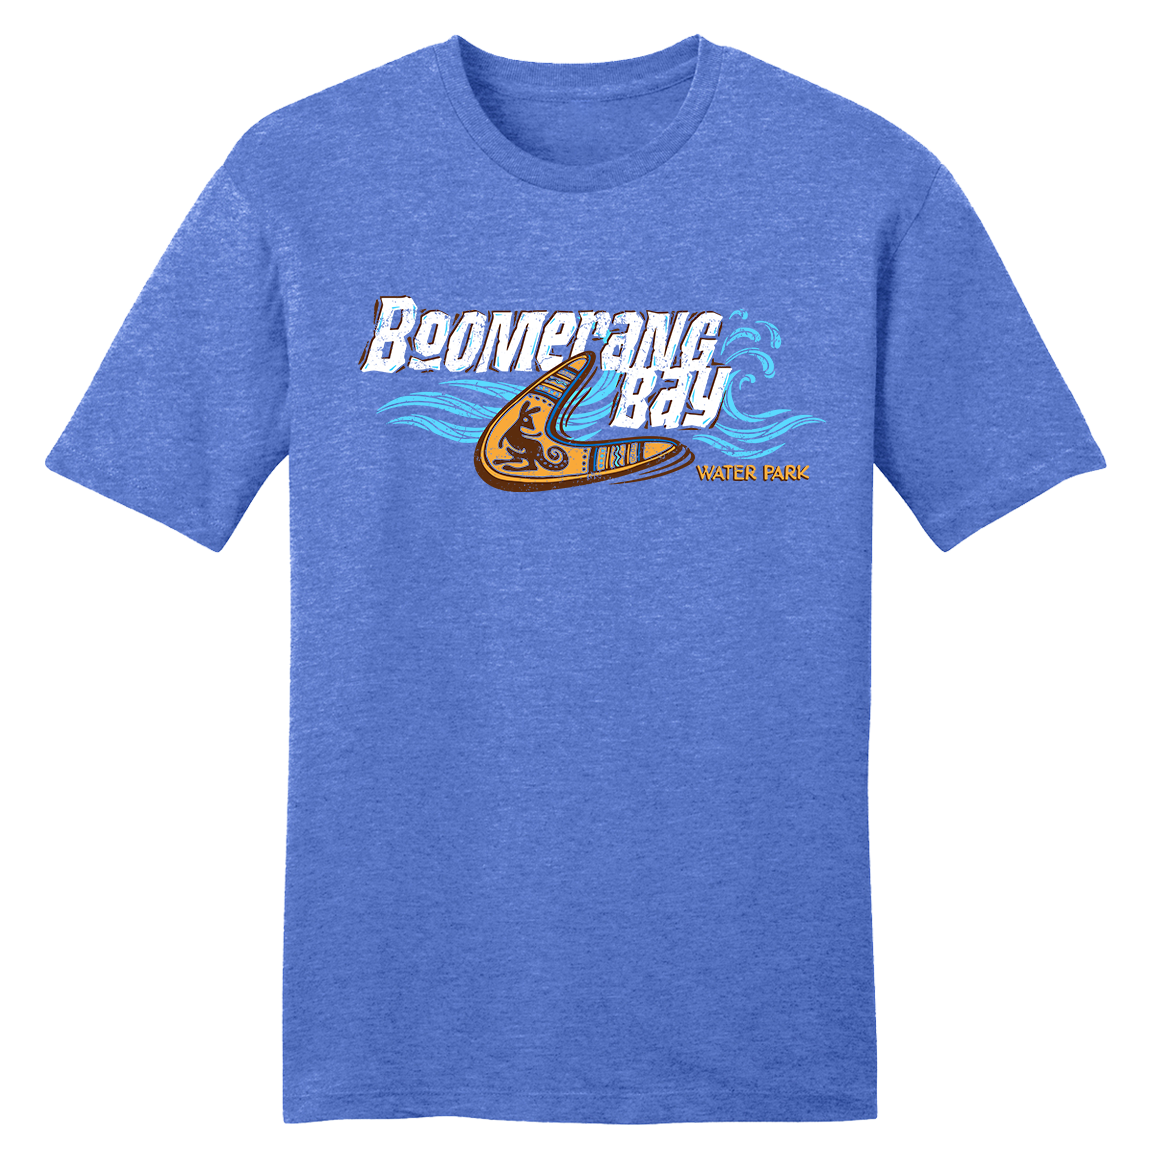 Boomerang Bay tee